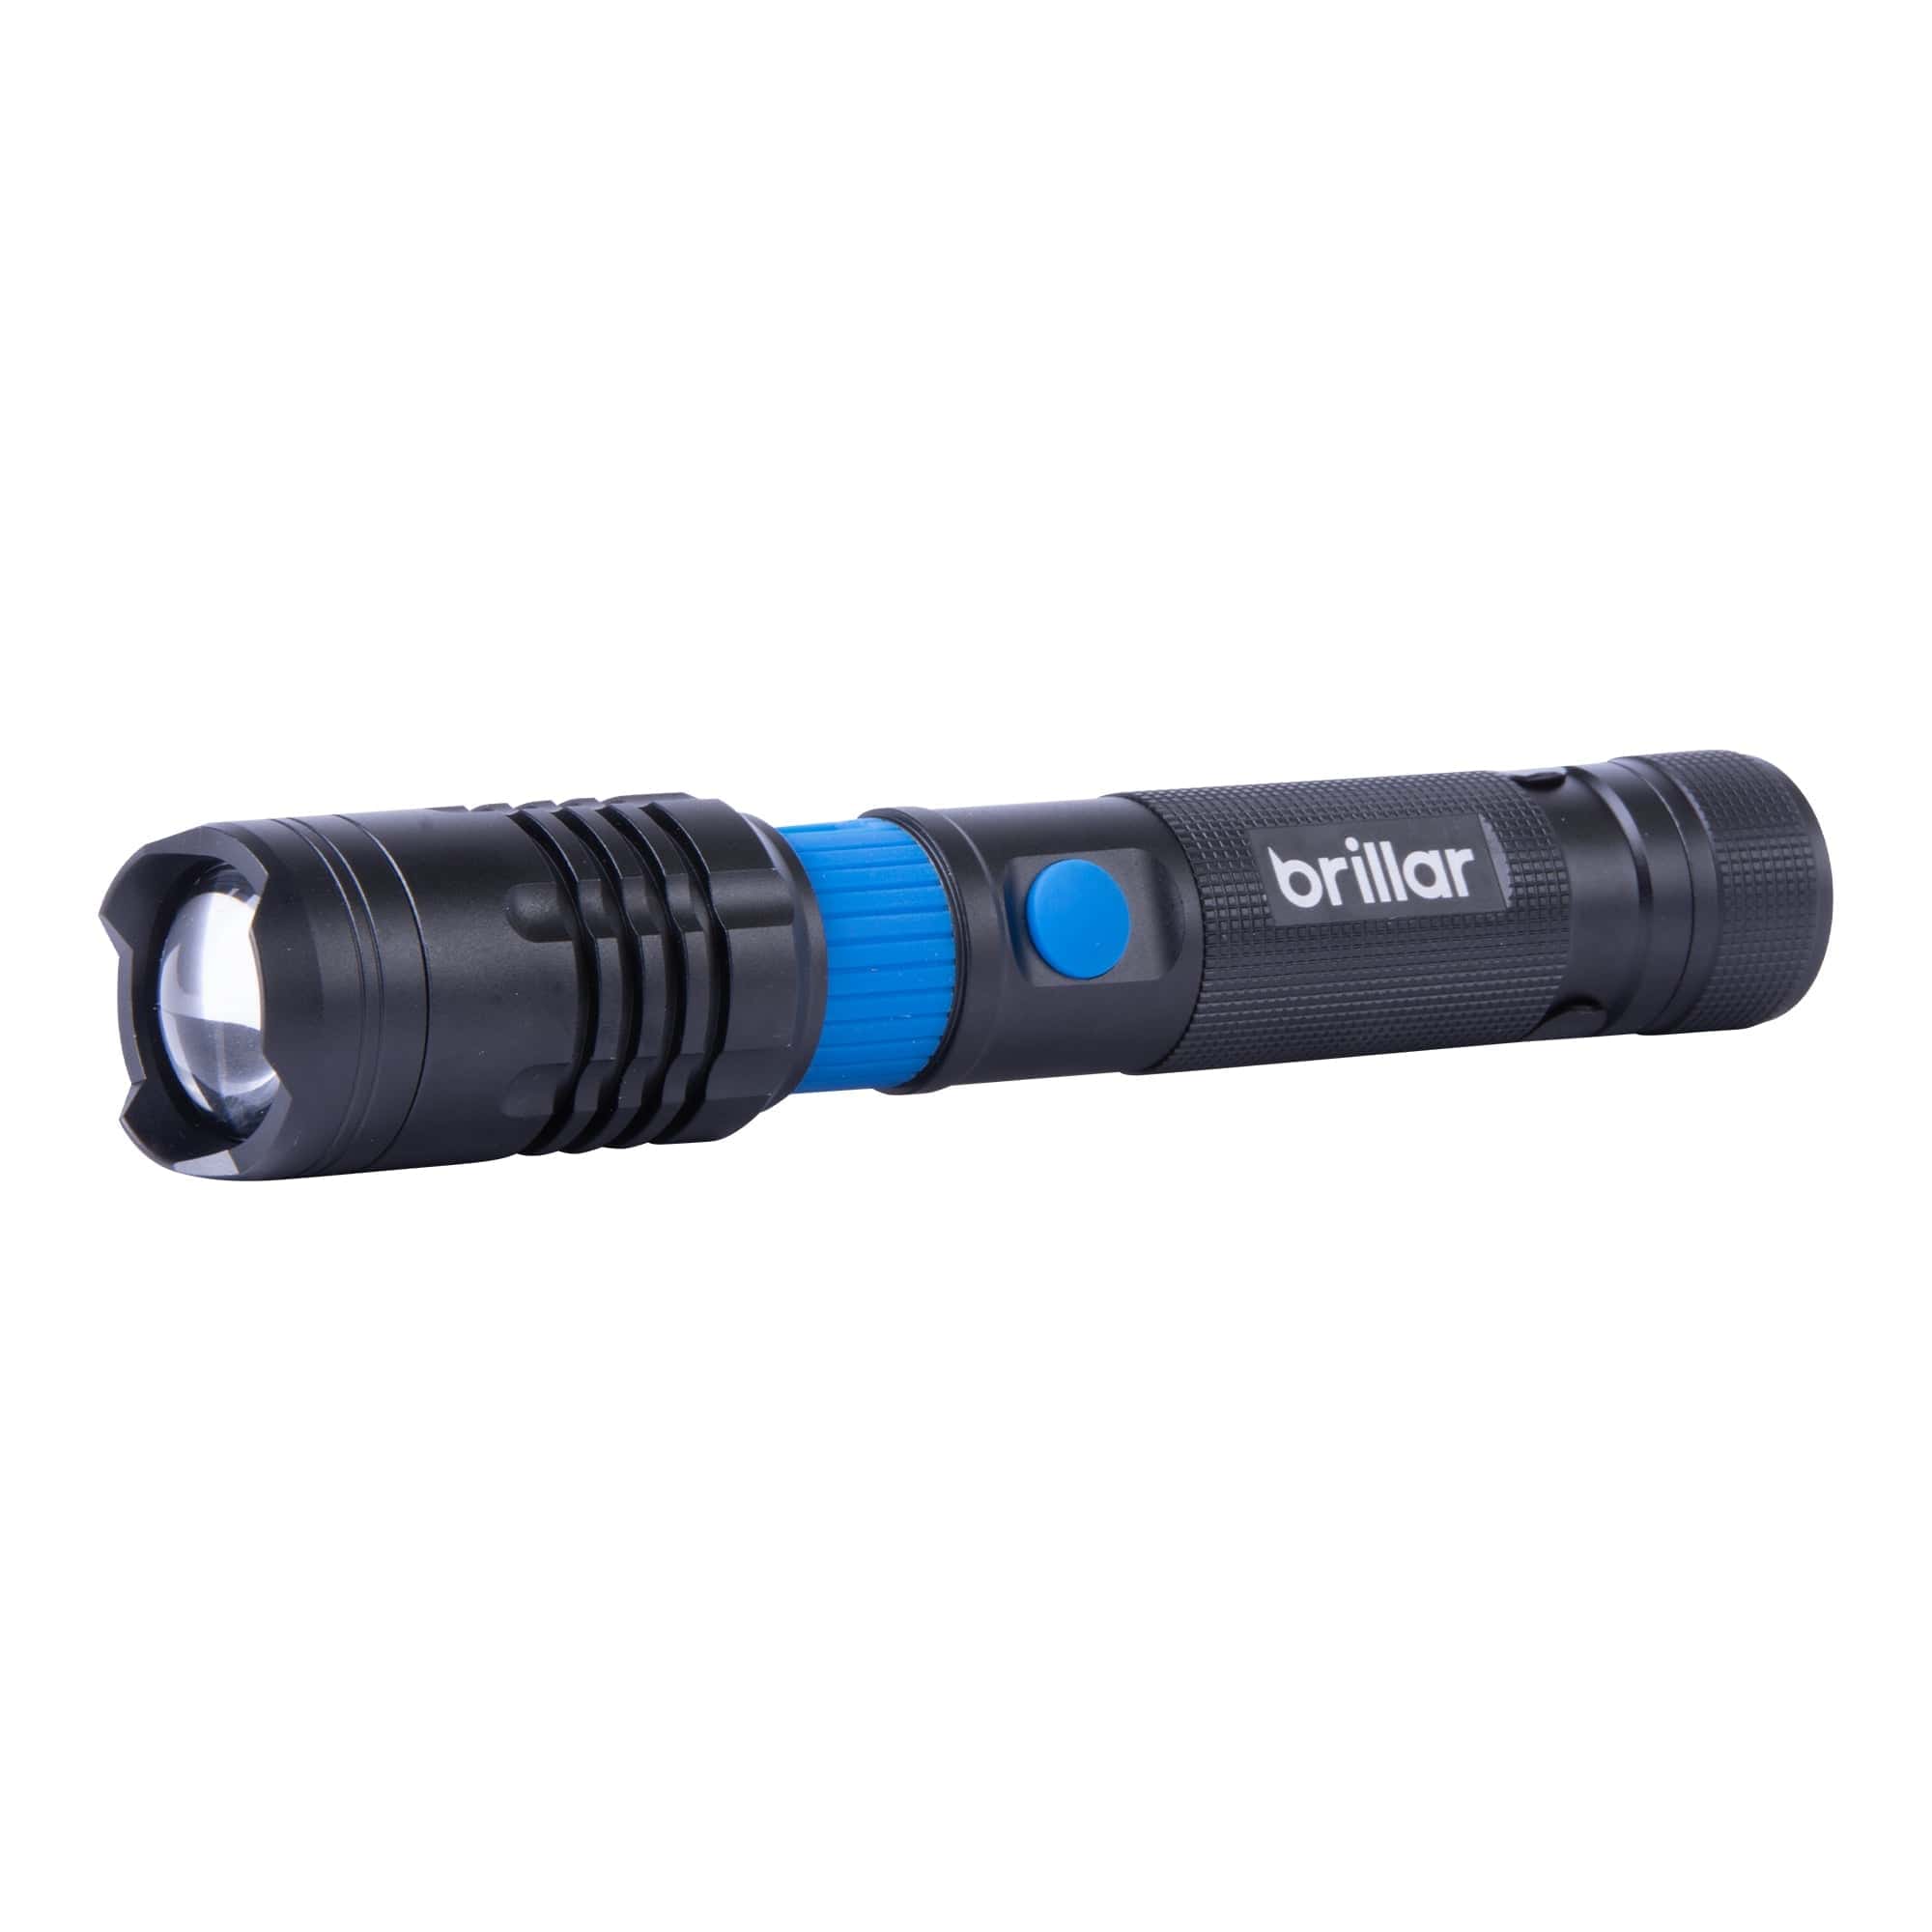 Brillar Electrical Investigator - 1000 Lumen USB Rechargeable Torch BR0079